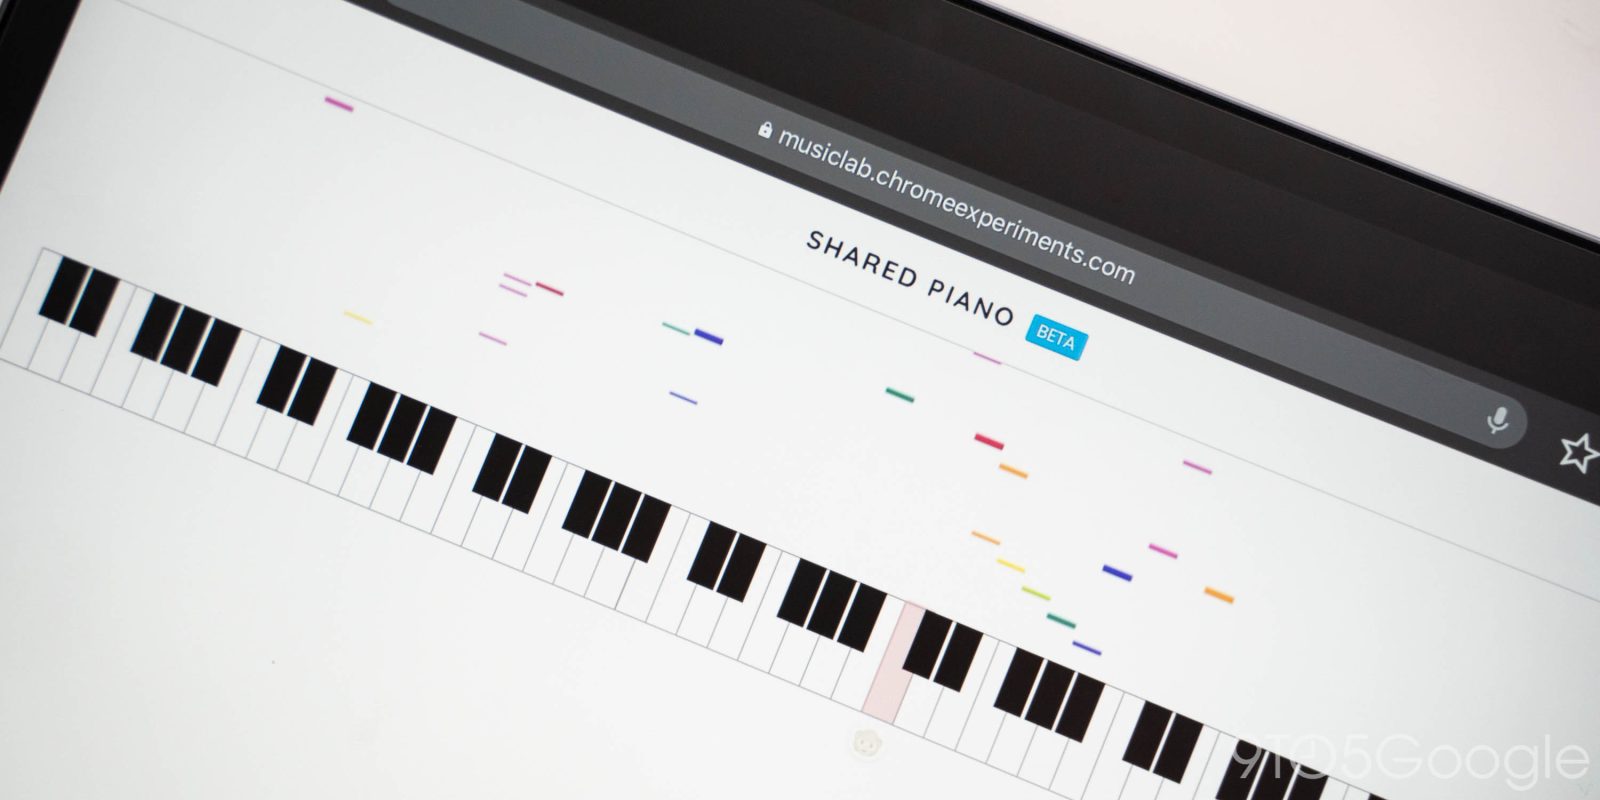 google shared piano experiment